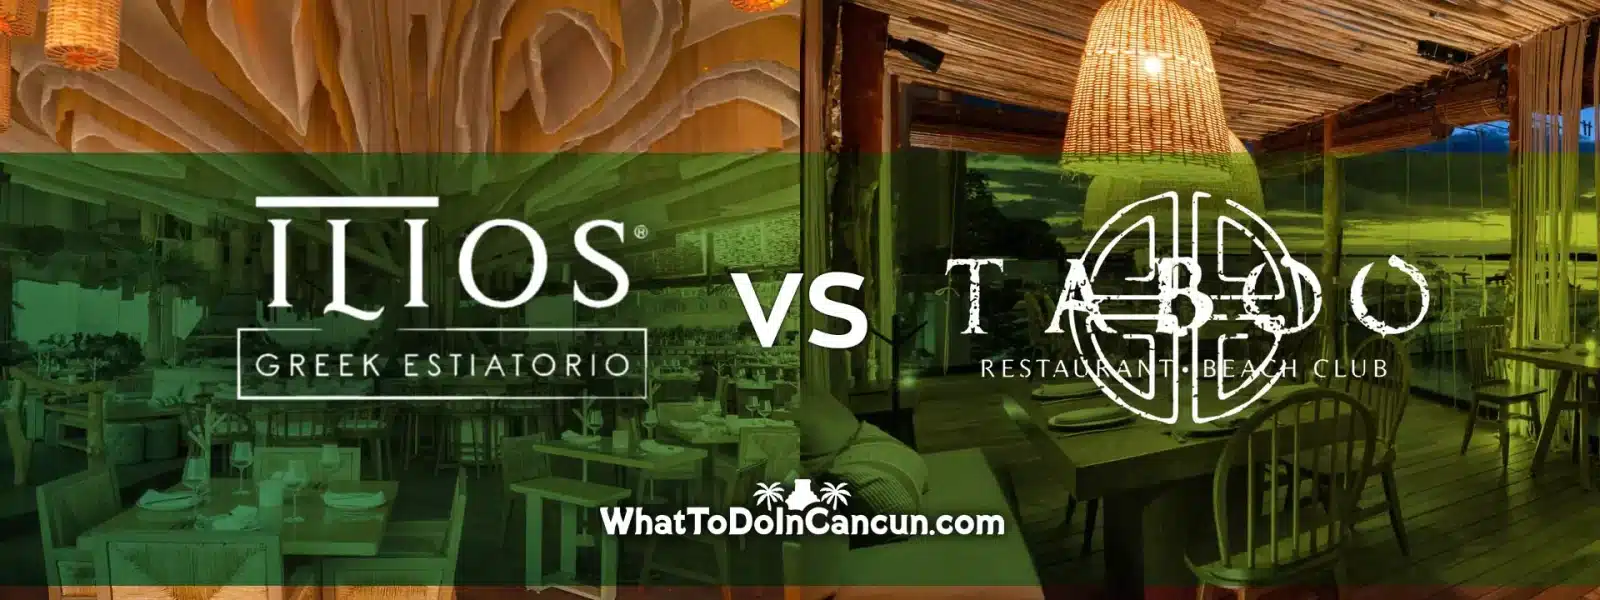 ilios-vs-taboo-cancun-restaurants-best-options-comparison